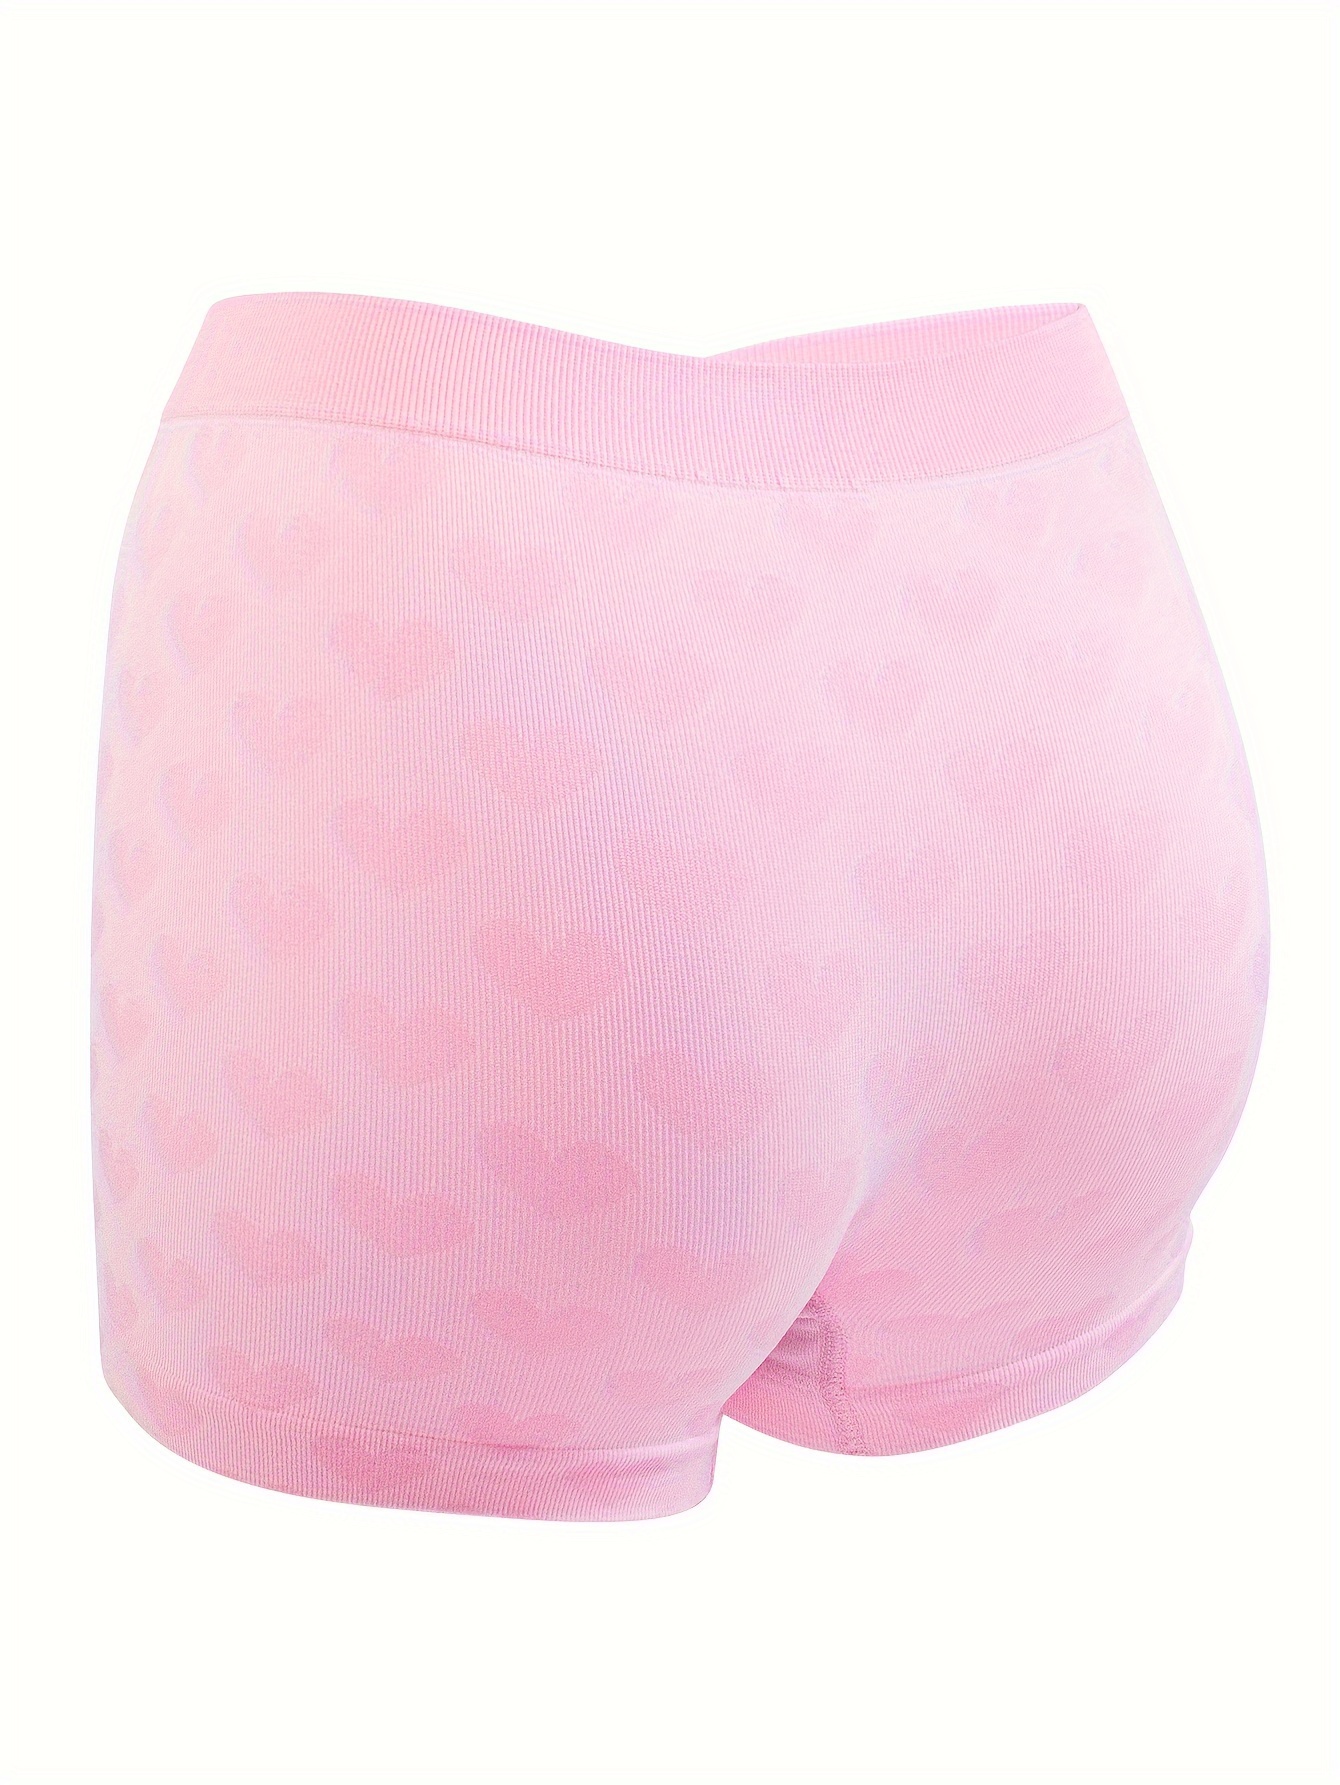 Heart Print Boyshort Panty, Soft & Comfort Seamless Valentine's Day Panty,  Women's Lingerie & Underwear